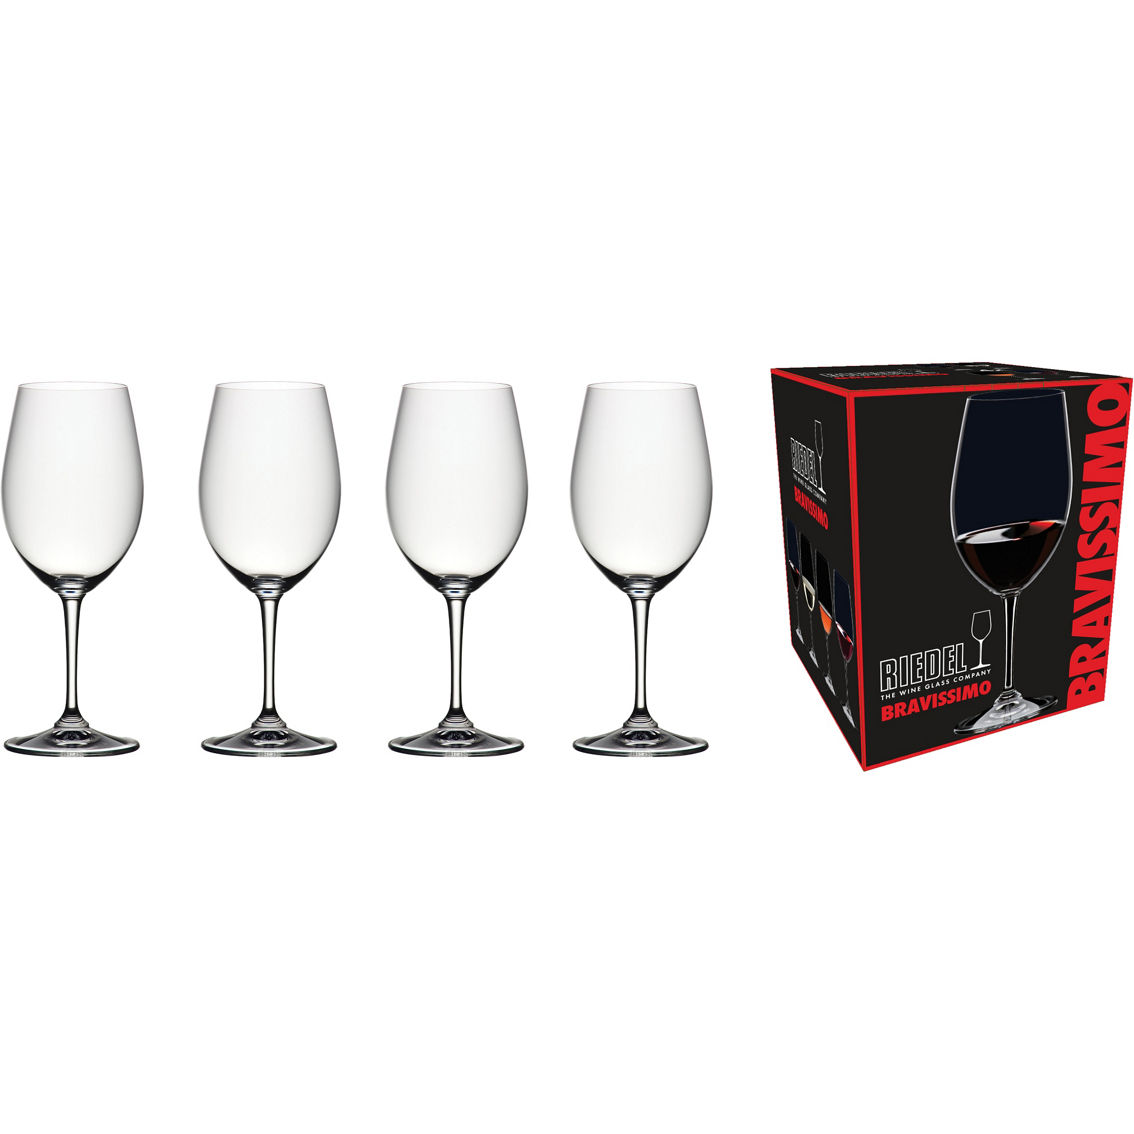 Riedel Bravissimo Wine Glasses Set 4 pc. - Image 2 of 5